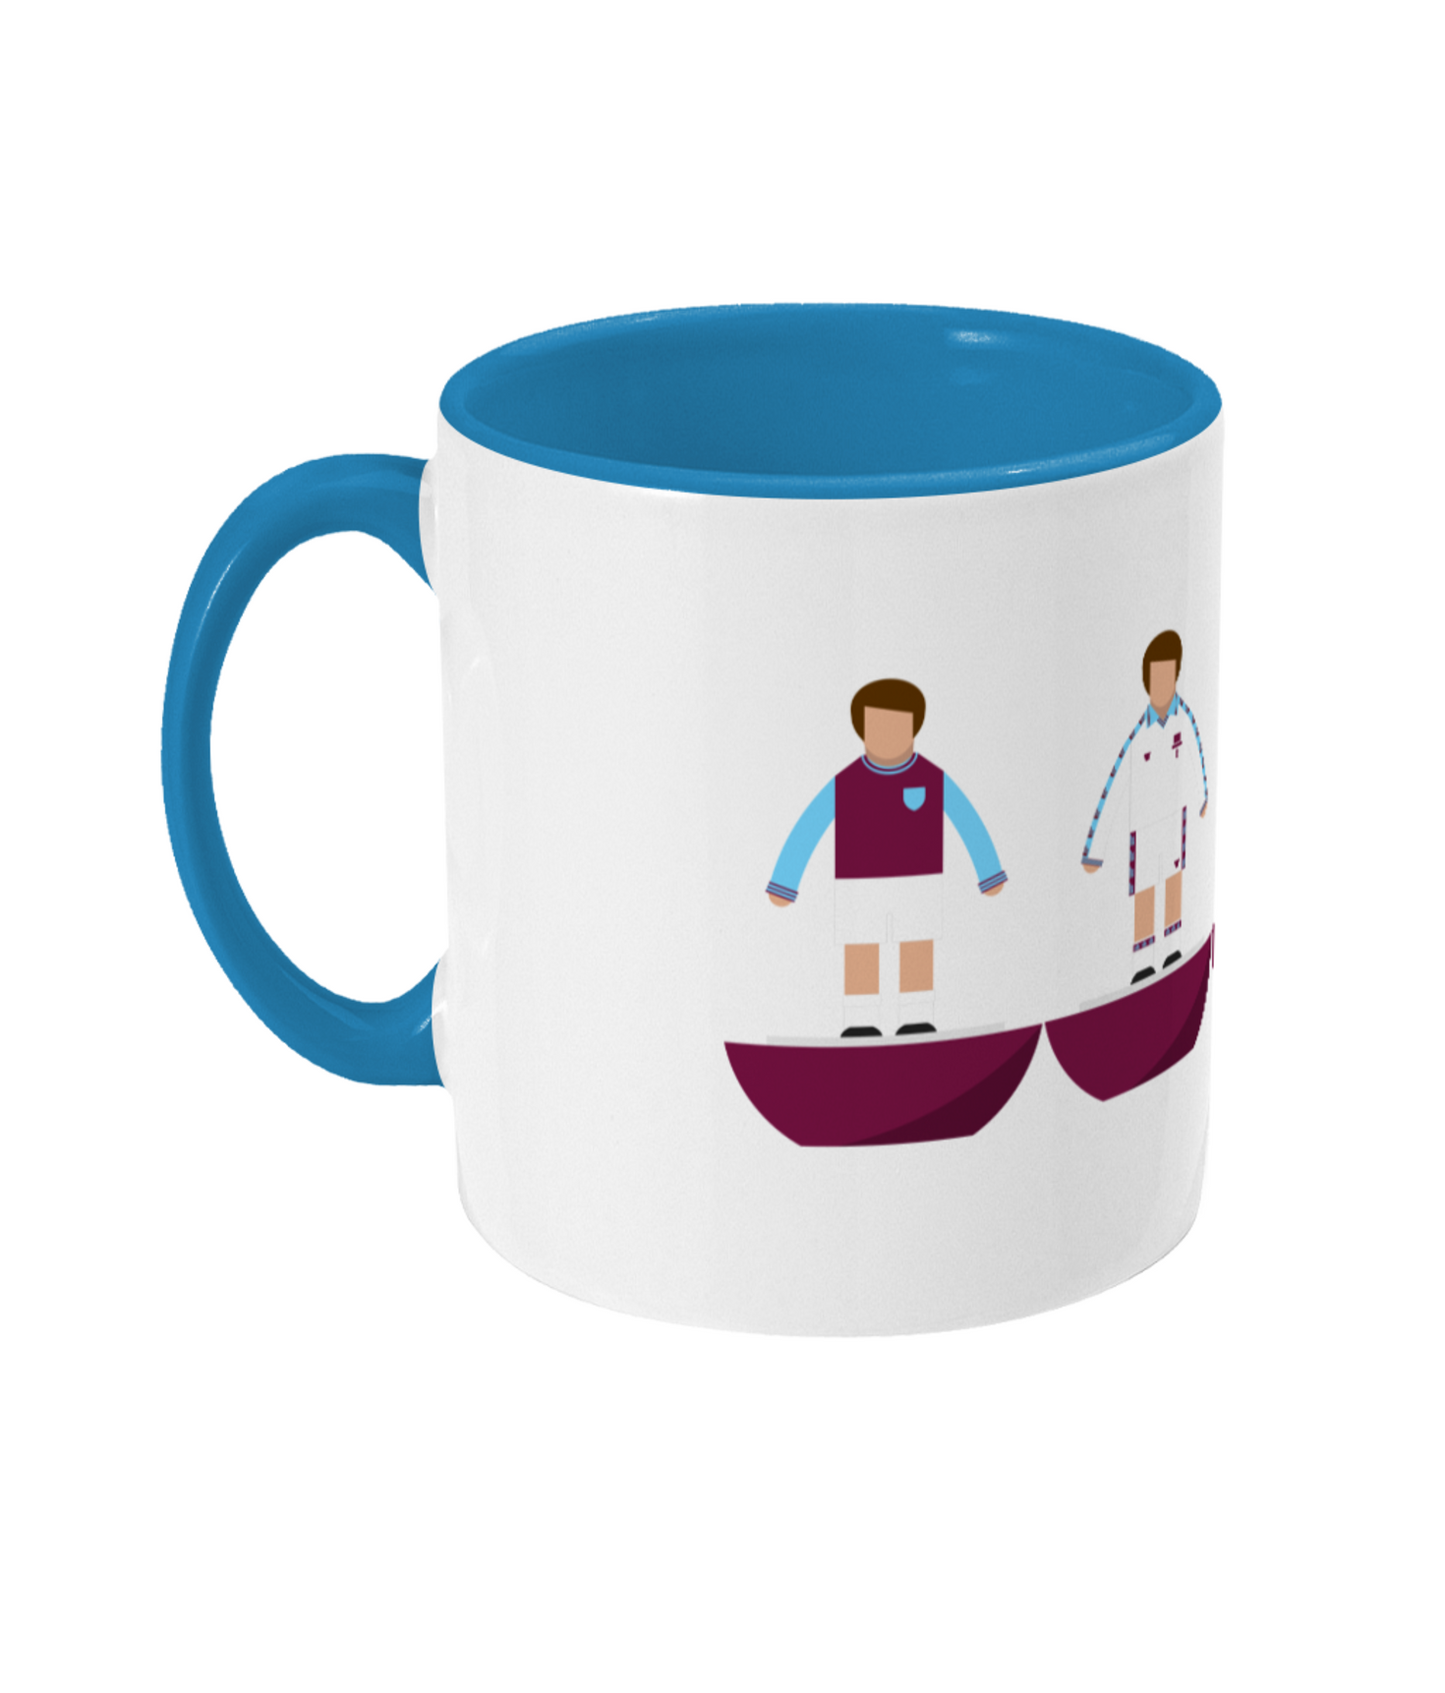 Football Kits 'West Ham combined' Mug